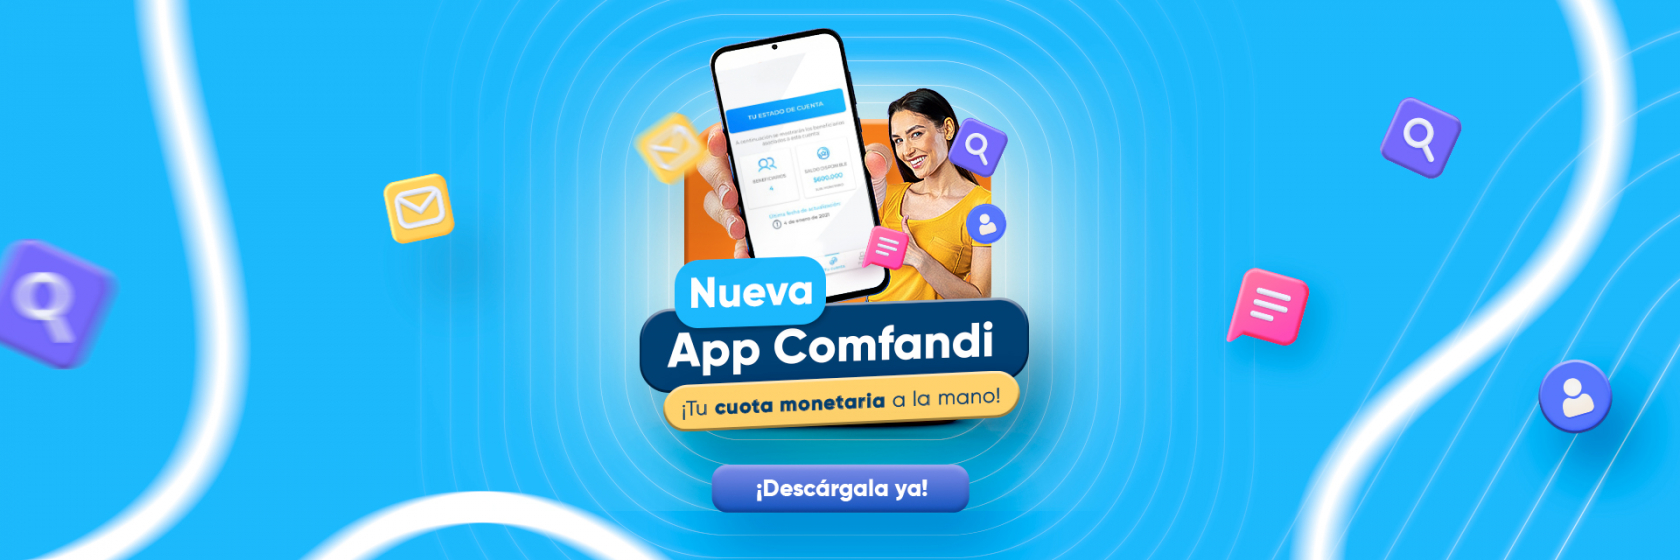 App Comfanid